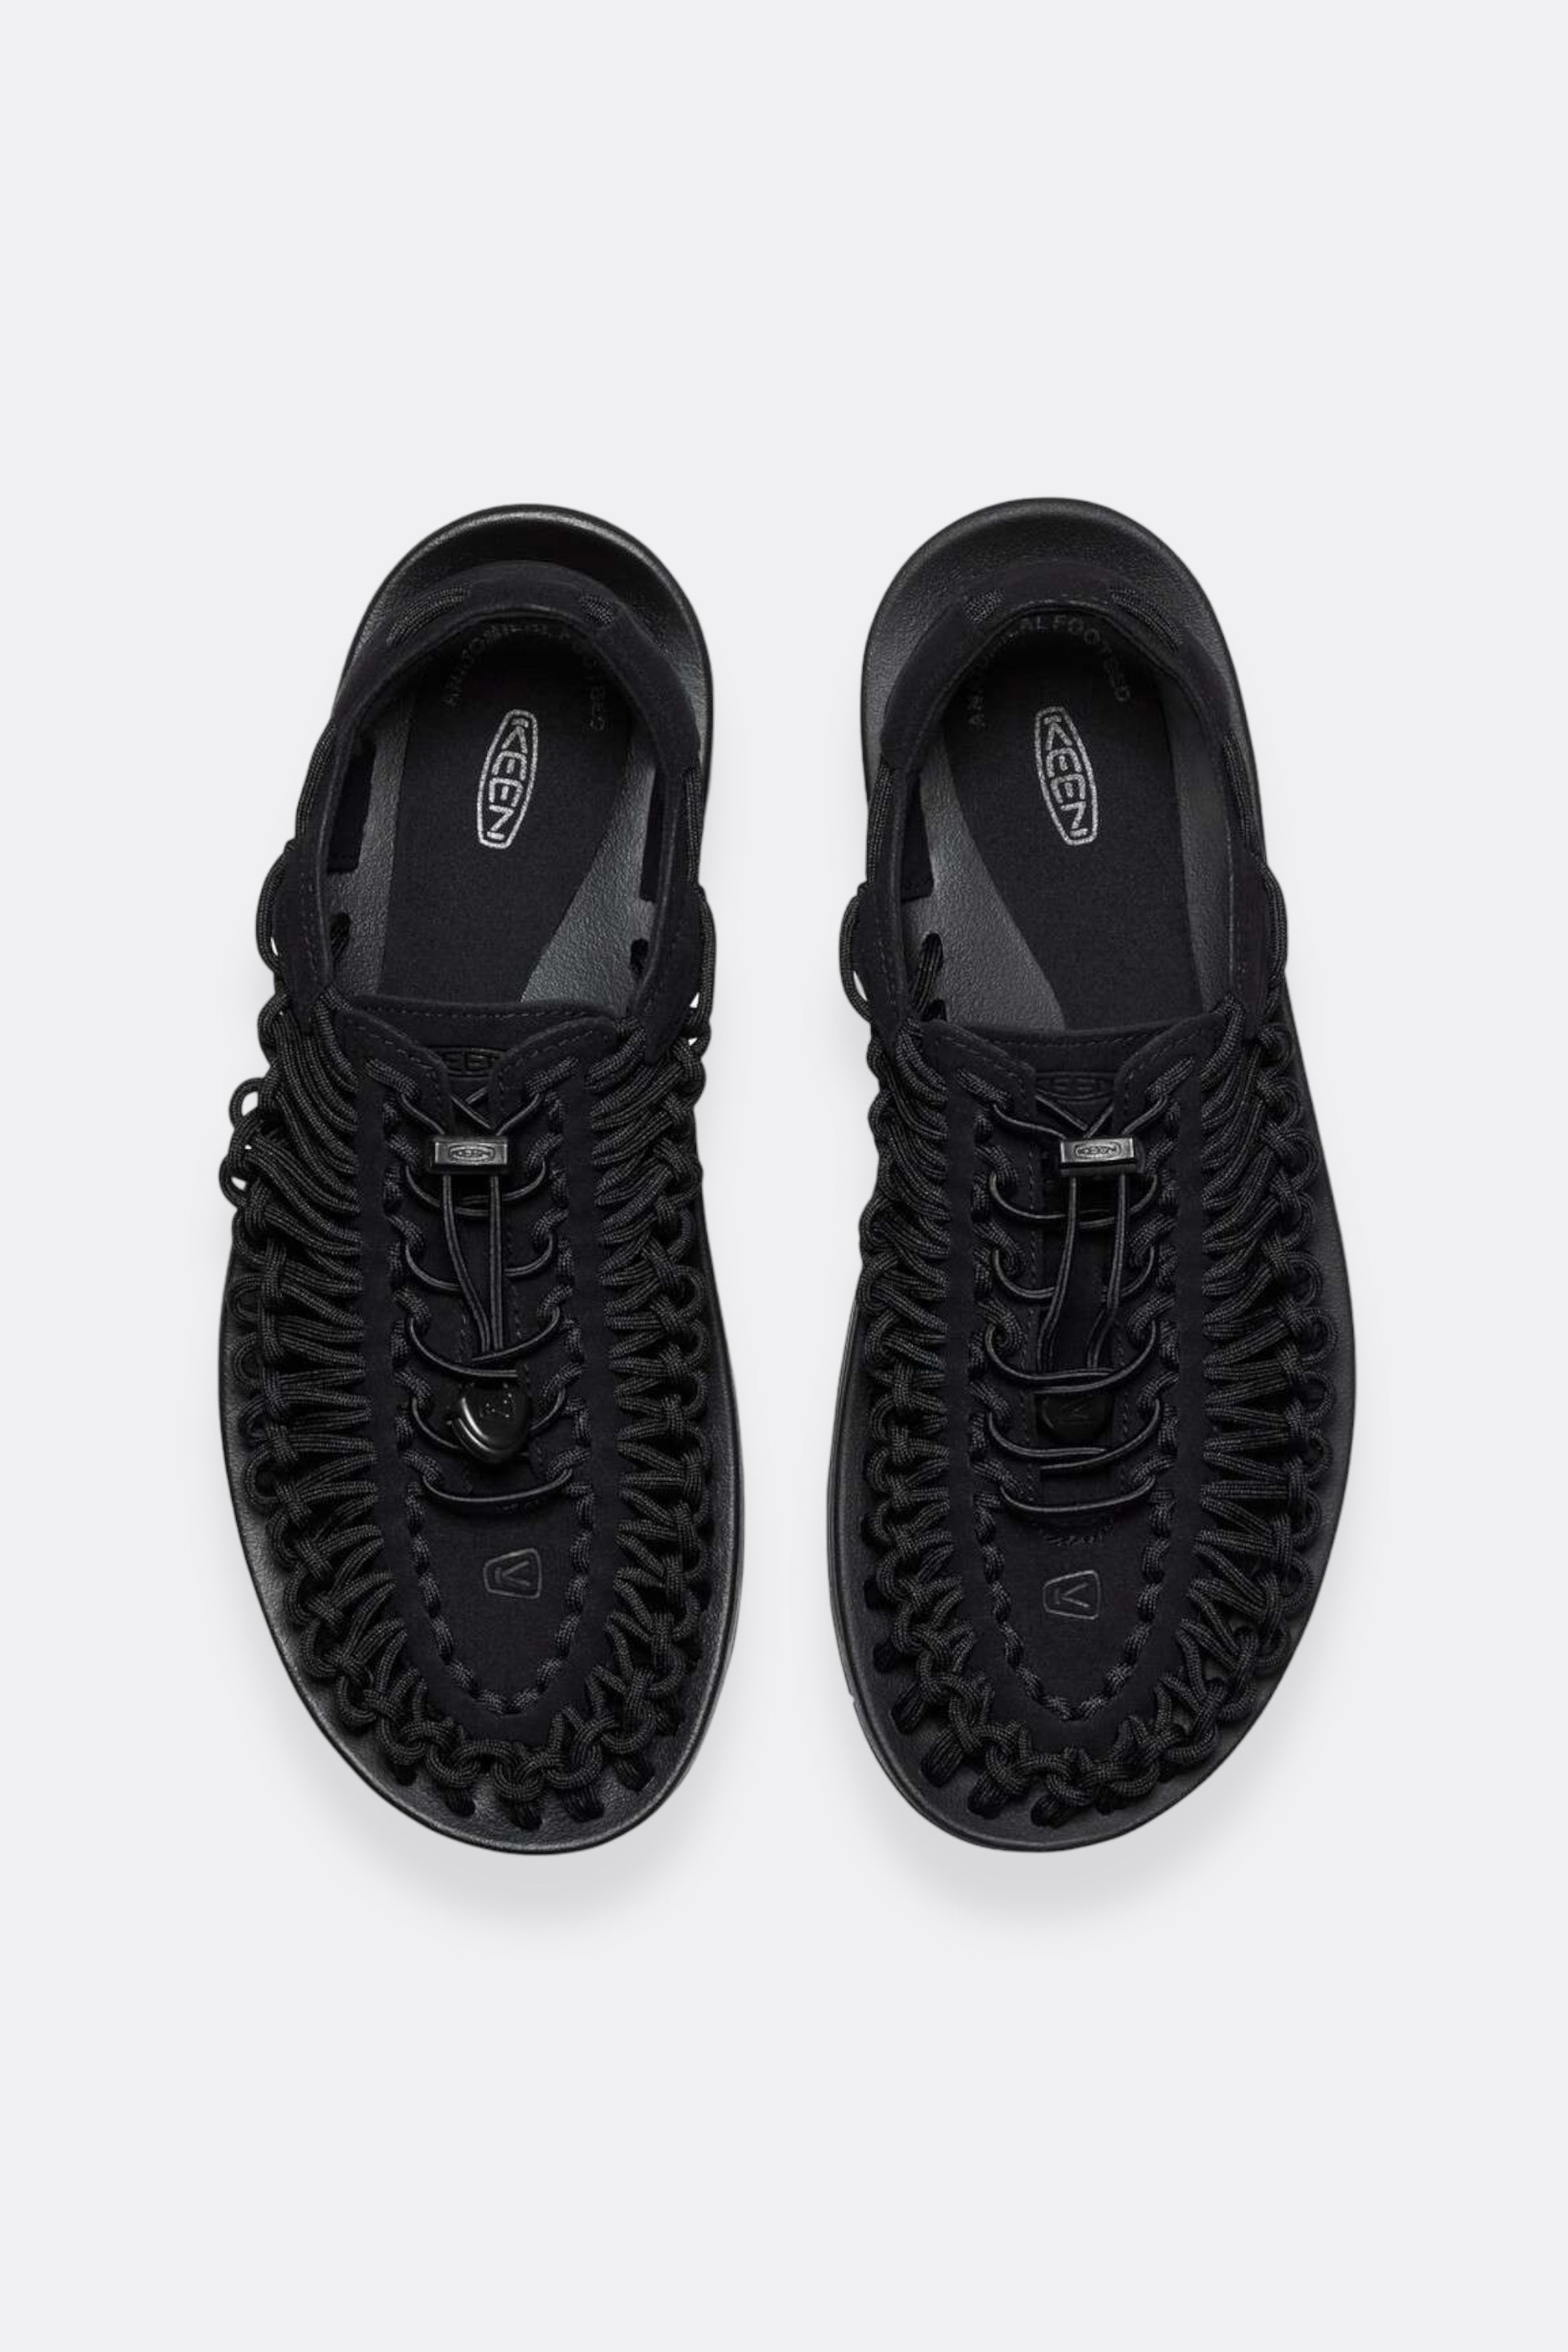 Keen - Uneek Sandals (Black / Black)